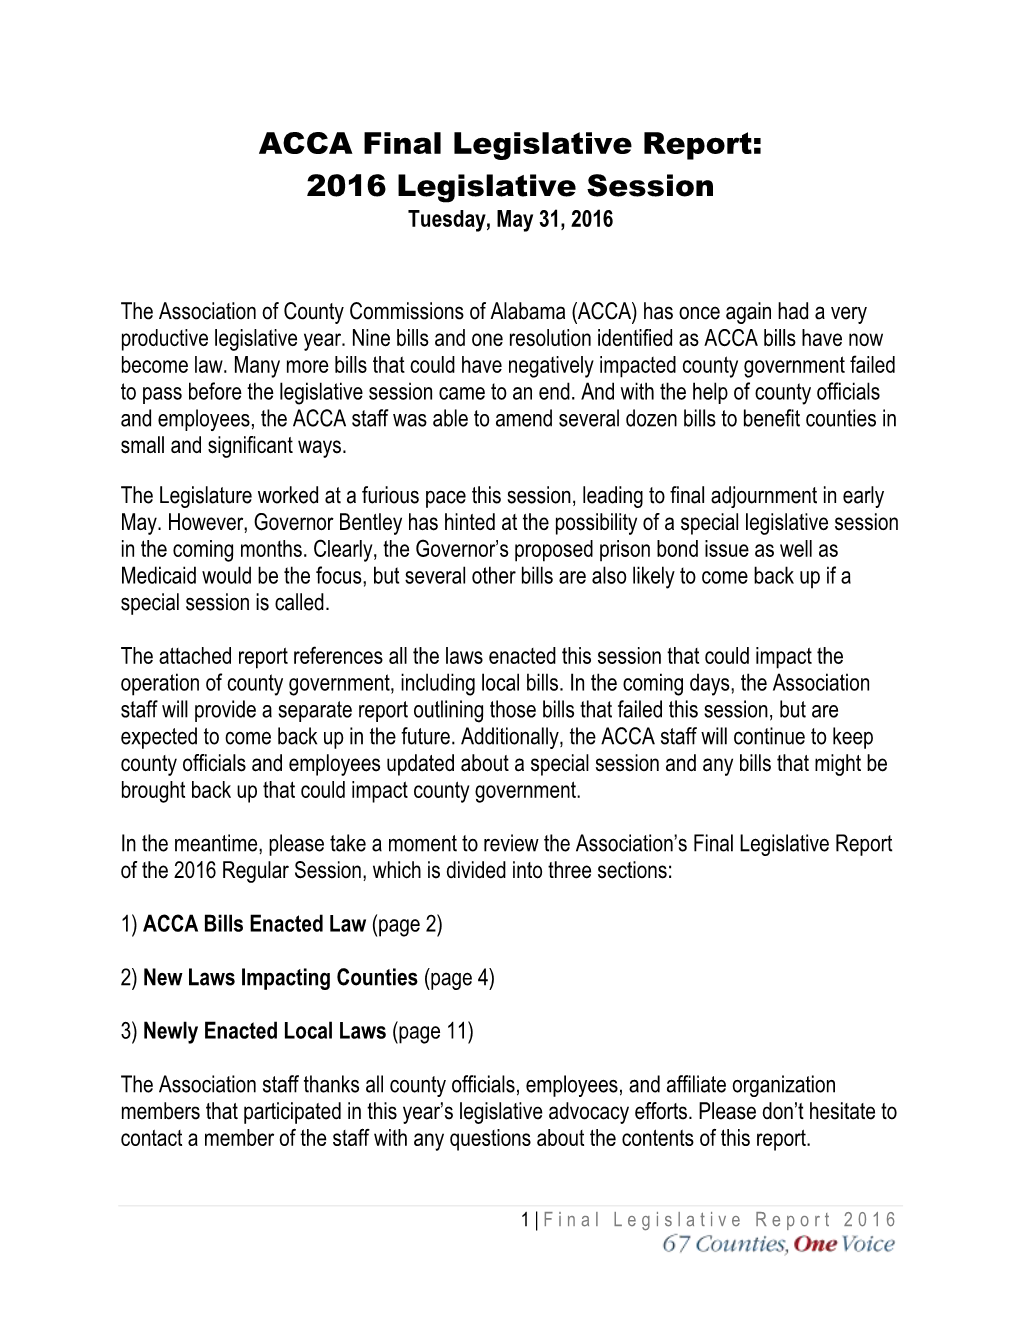 2016 Legislative Session Tuesday, May 31, 2016